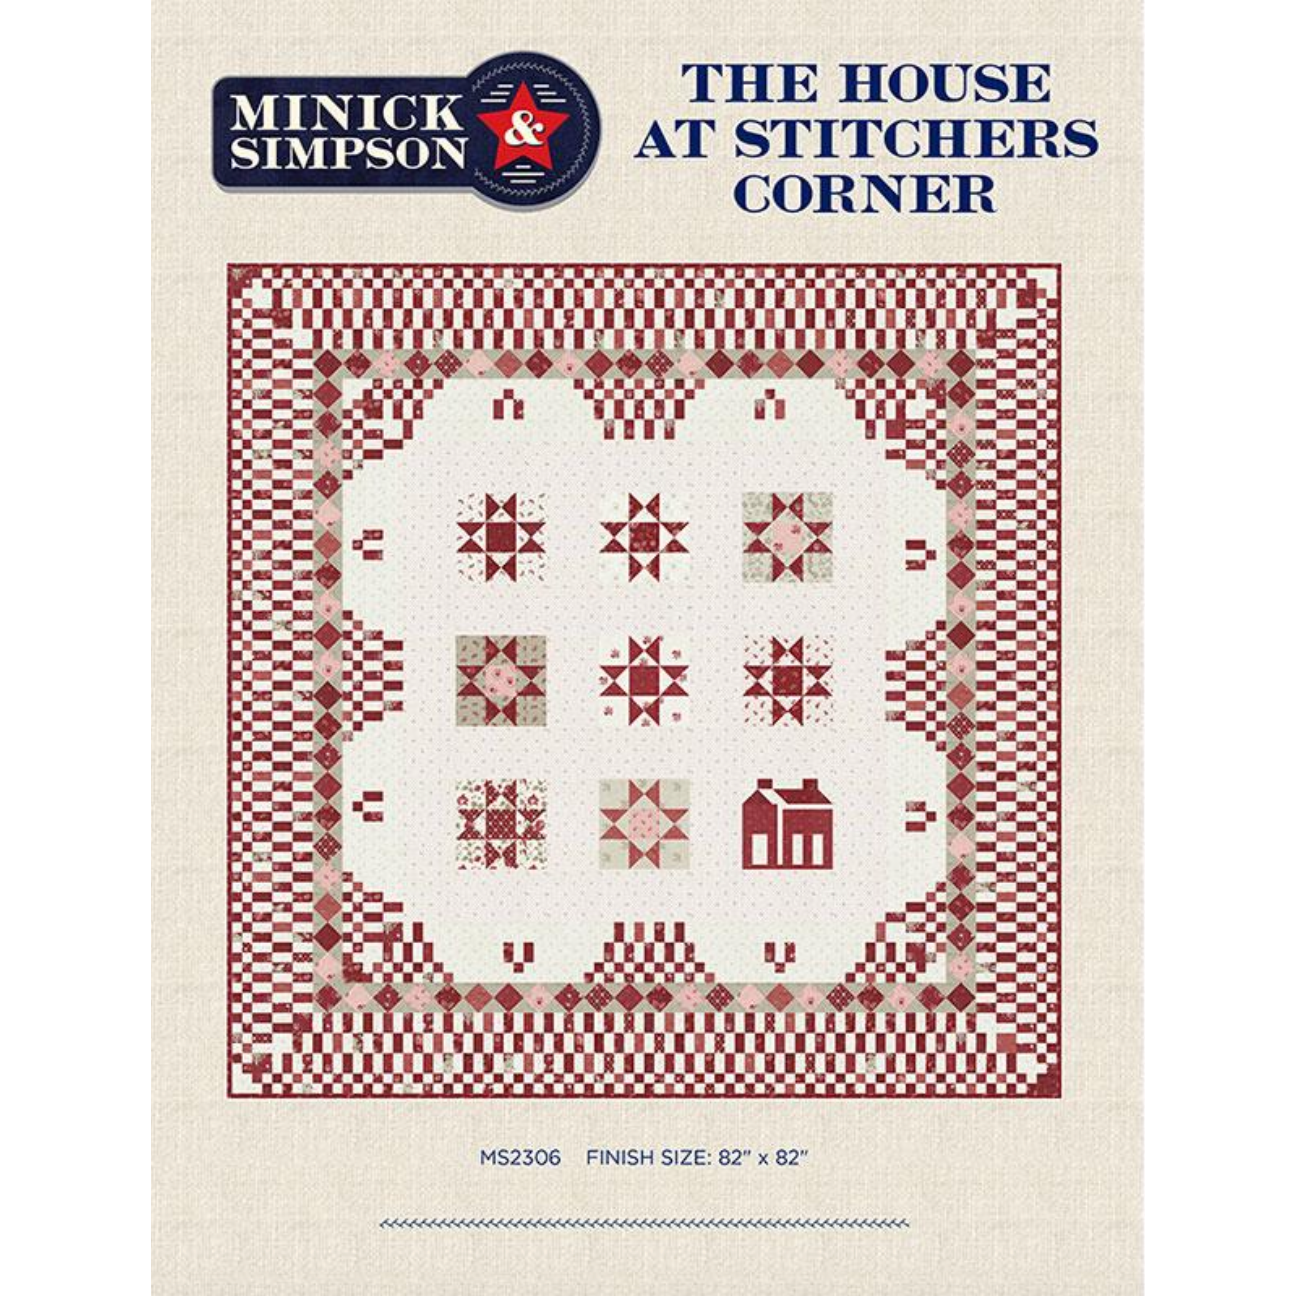 Minick & Simpson ~ The House at Stitcher's Corner Quilt Pattern